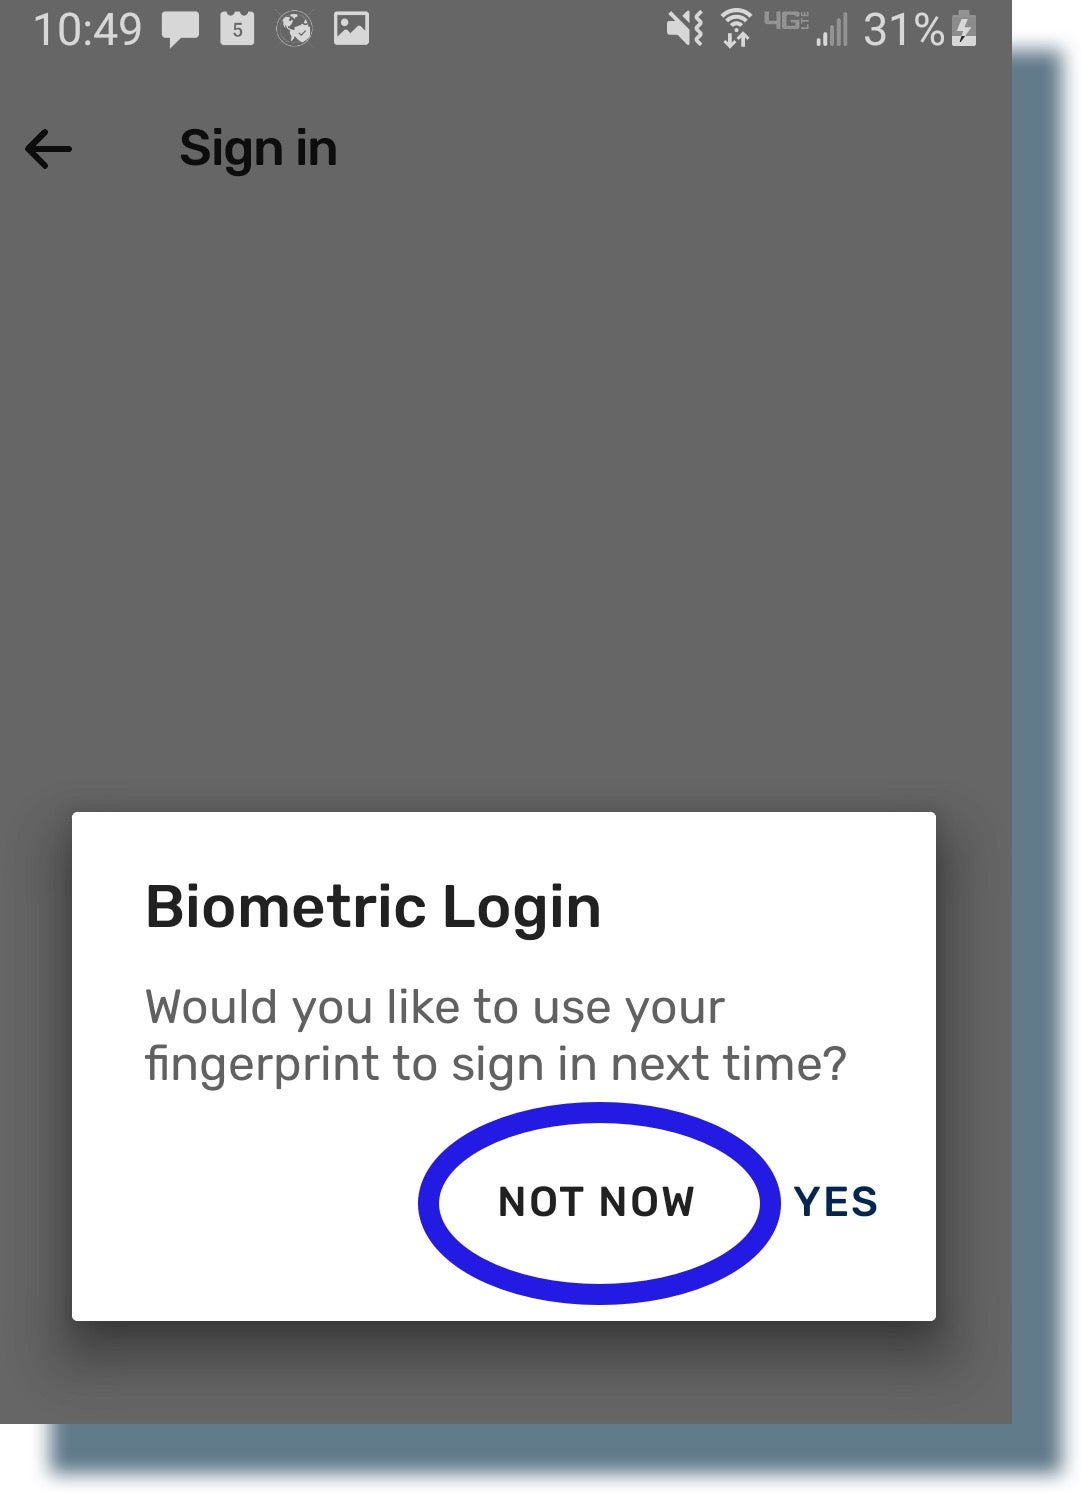 Pop-up screen asking if user wants to use biometric login.